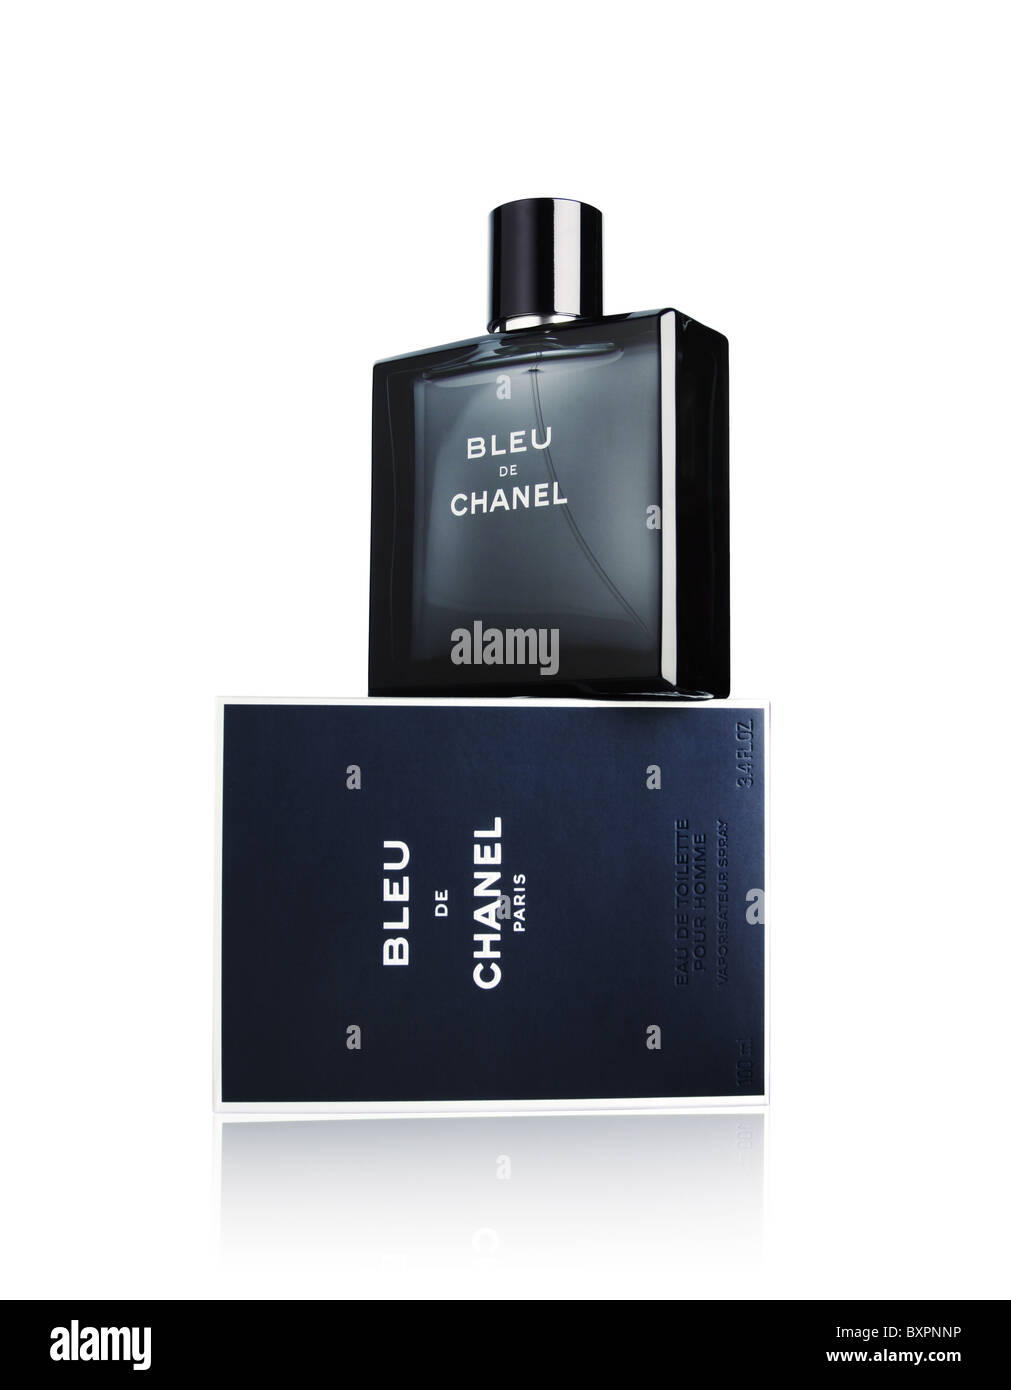 Bleu De Chanel Fragrance For Men Stock Photo - Download Image Now - Chanel  - Designer Label, Perfume Sprayer, Perfume - iStock